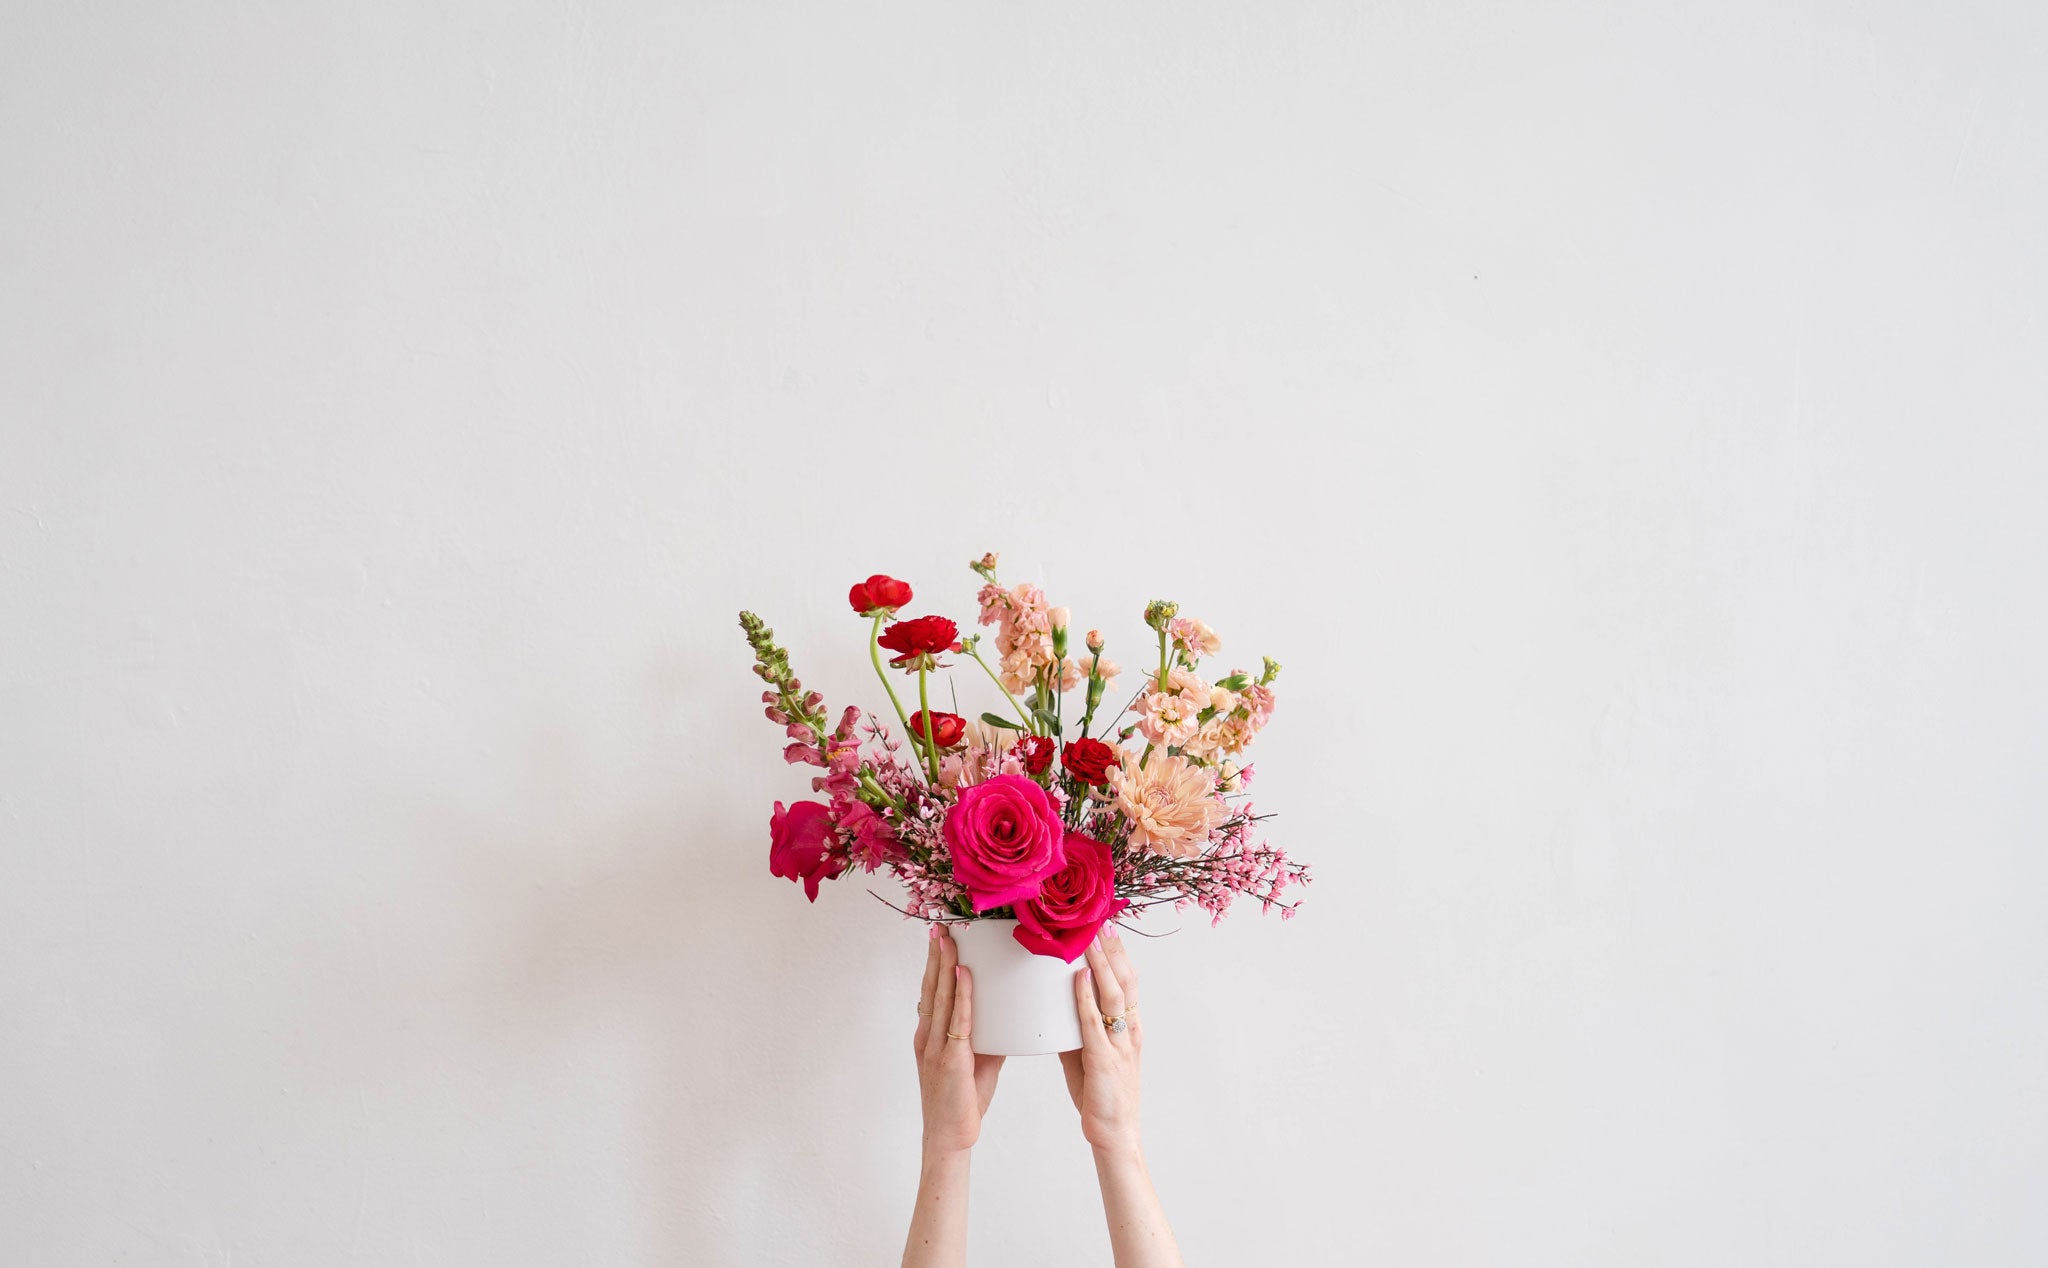 Hands holding a Native Poppy Valentine’s Day arrangement